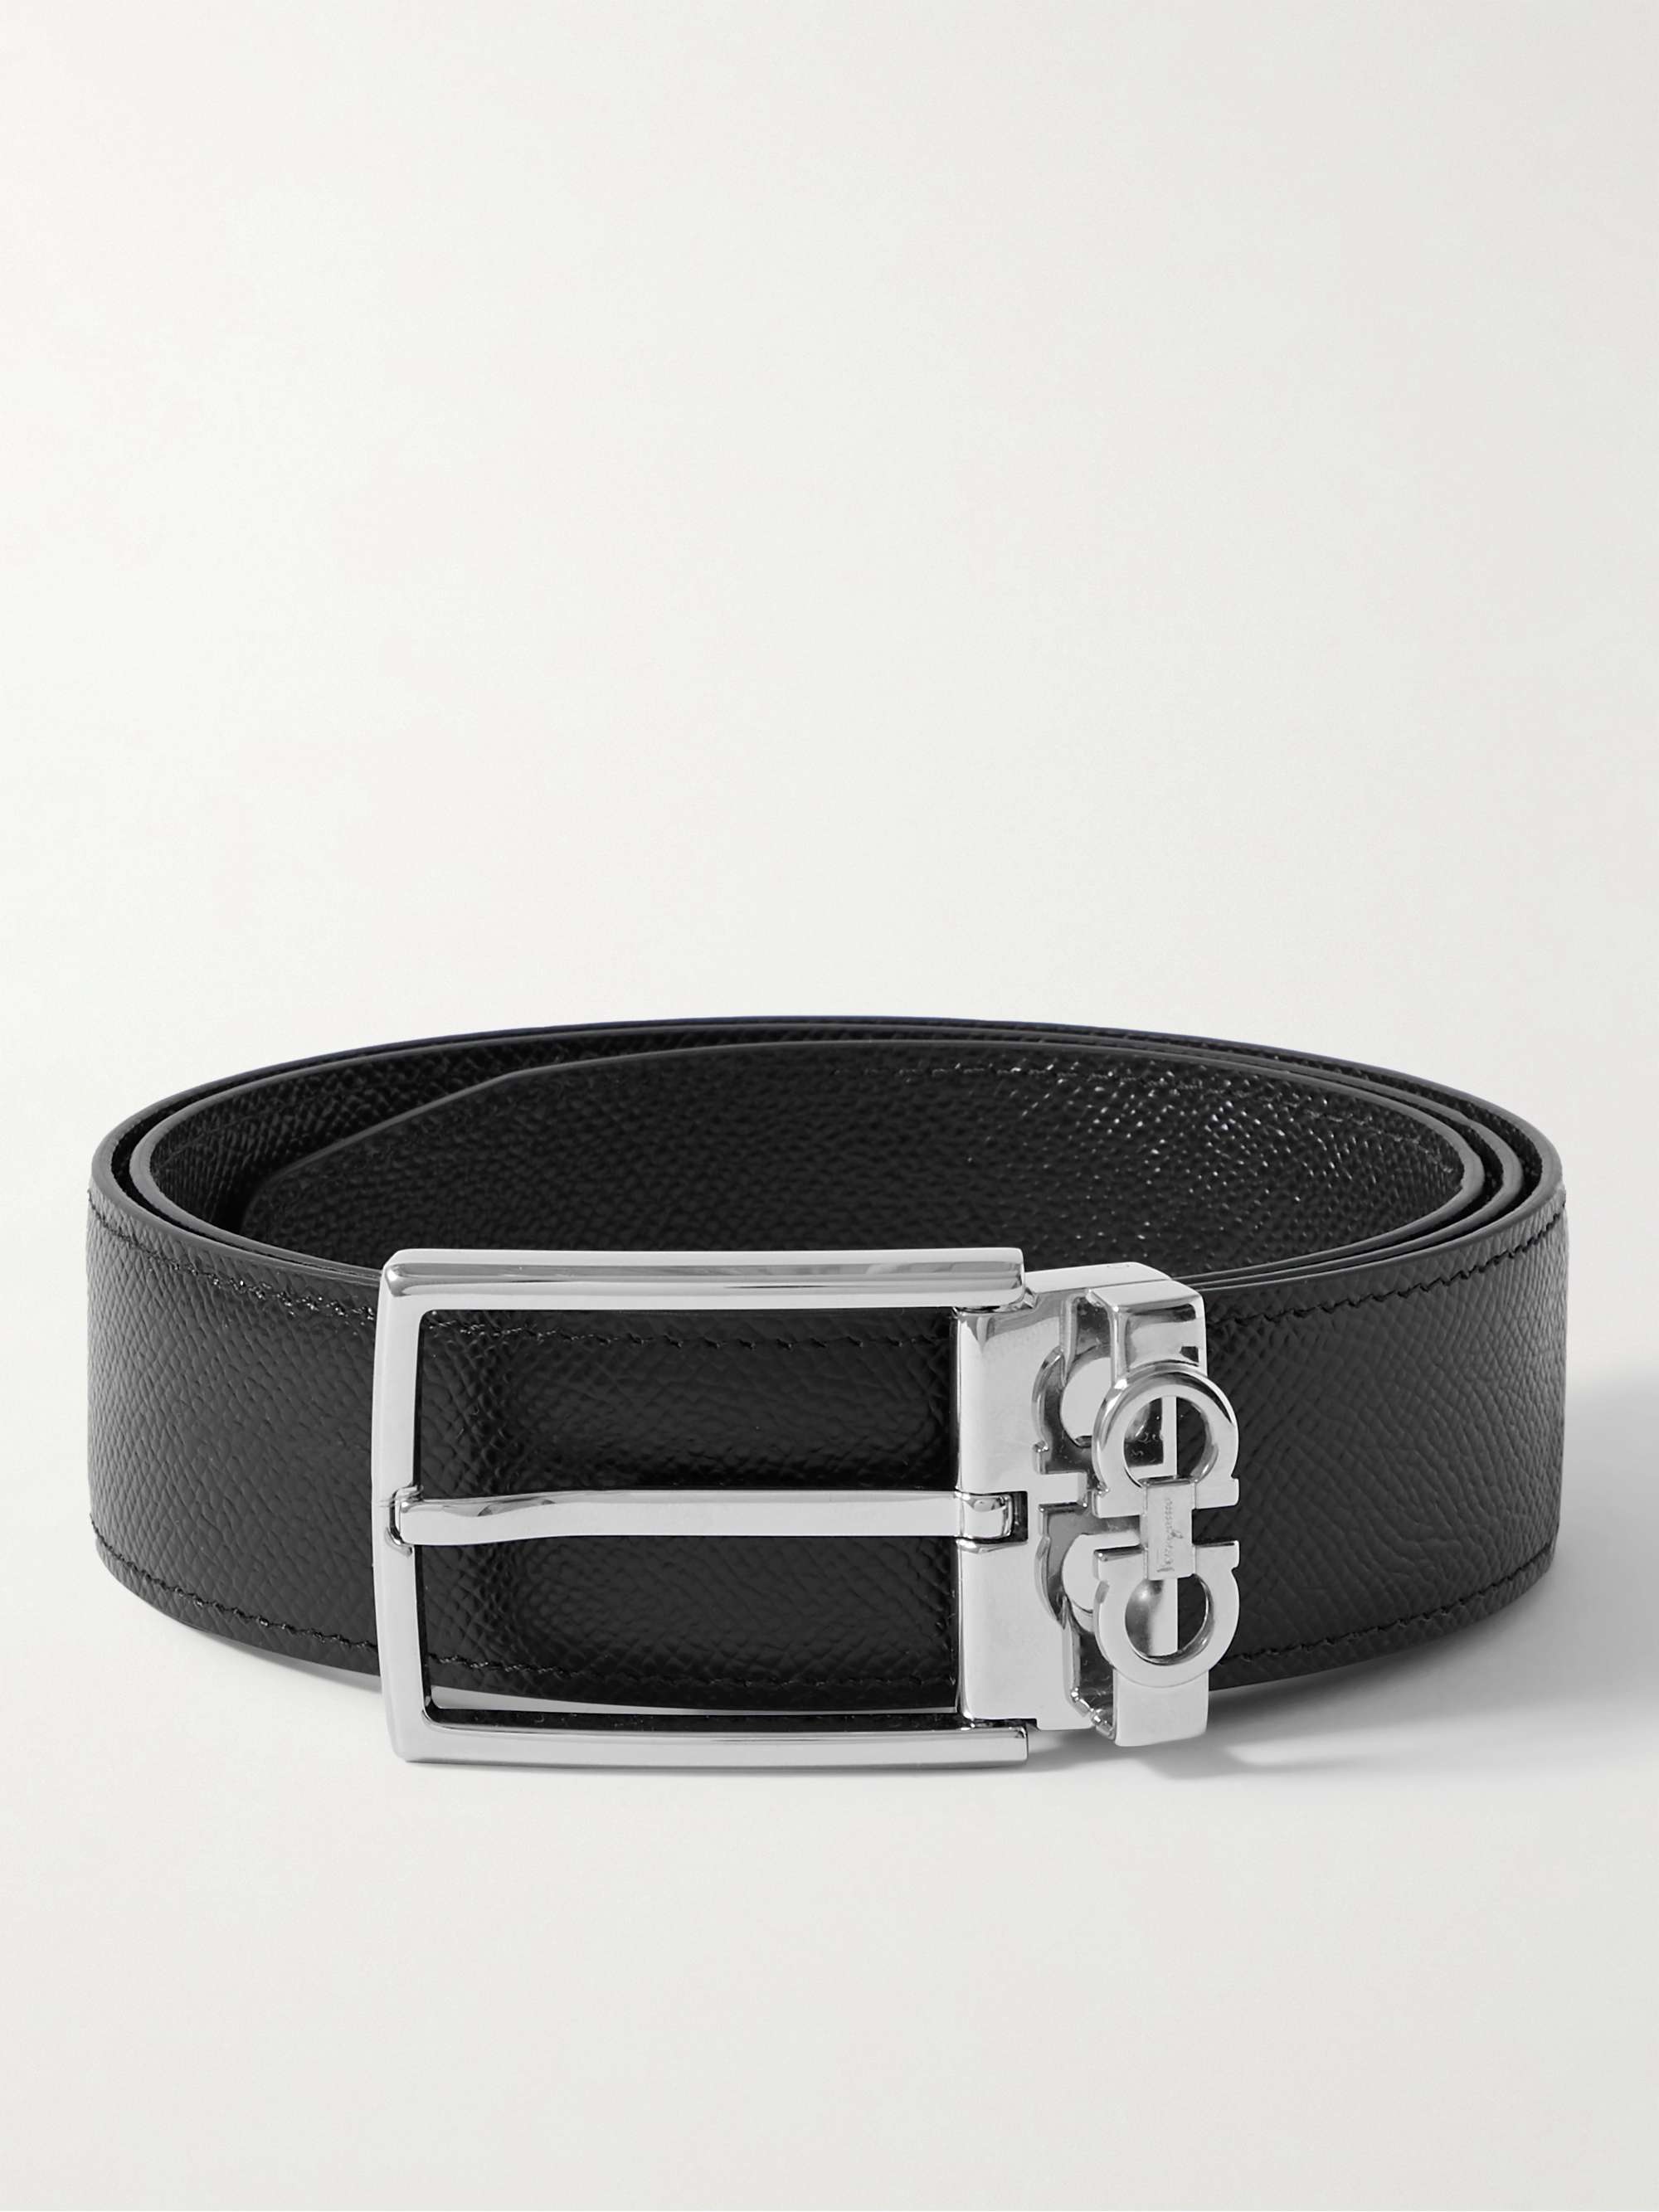 Salvatore Ferragamo Man Black Leather Belt 